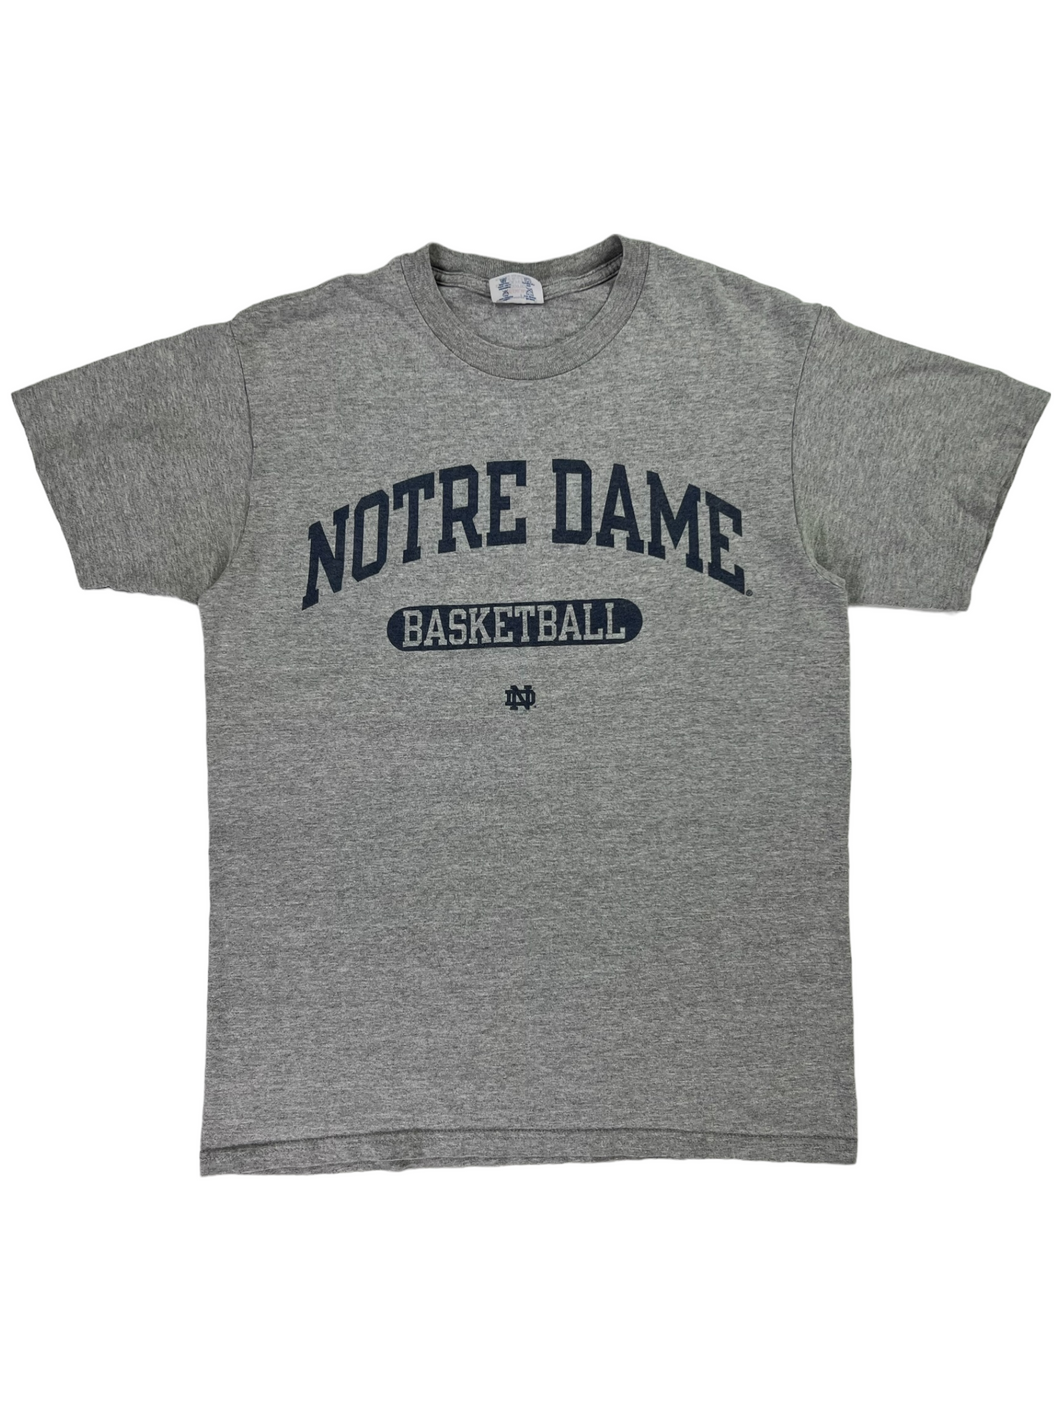 Vintage 90s Champion Notre Dame Basketball tee (M)